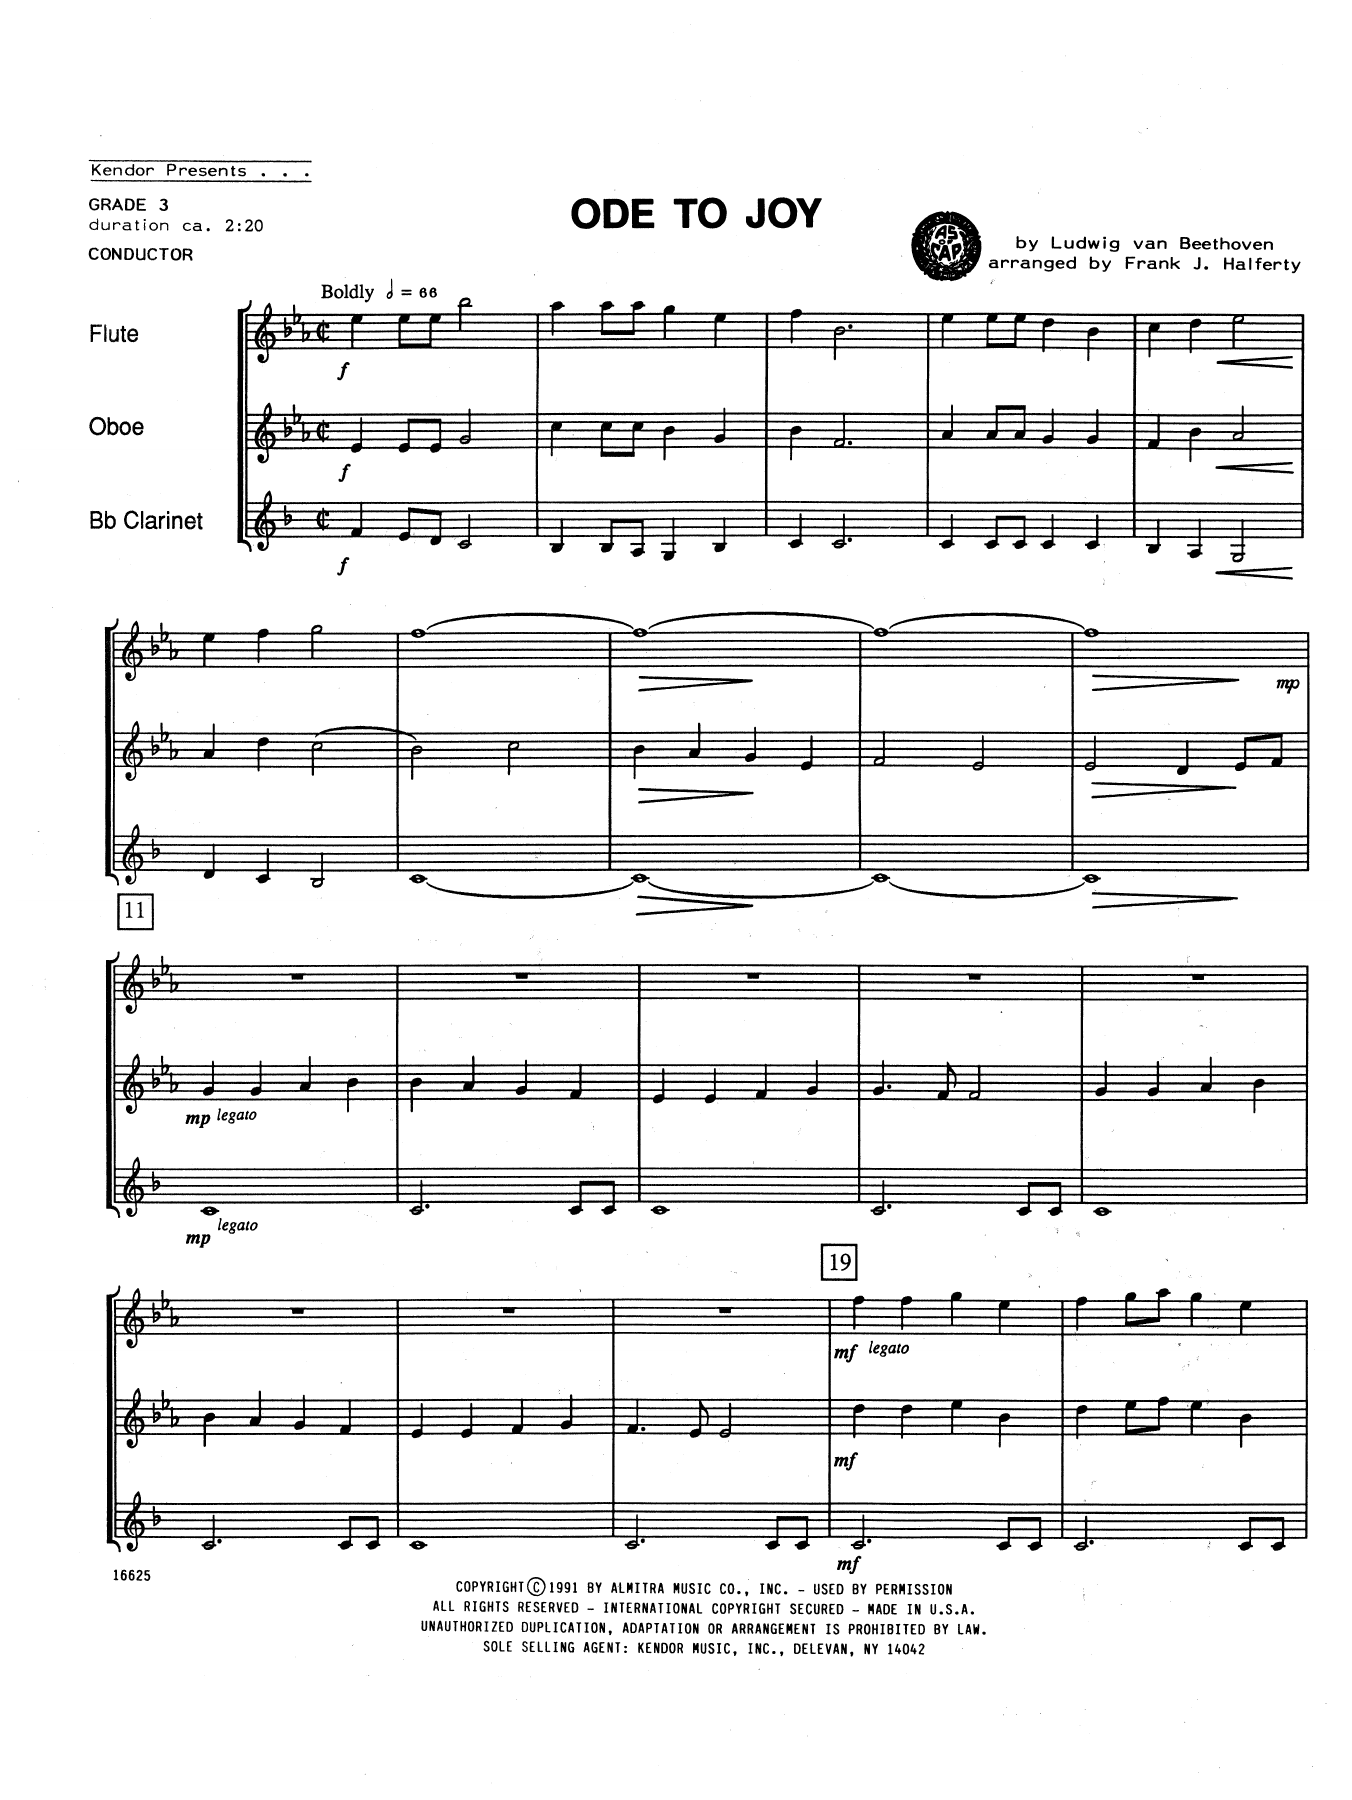 Frank J. Halferty Ode To Joy - Full Score sheet music notes and chords. Download Printable PDF.